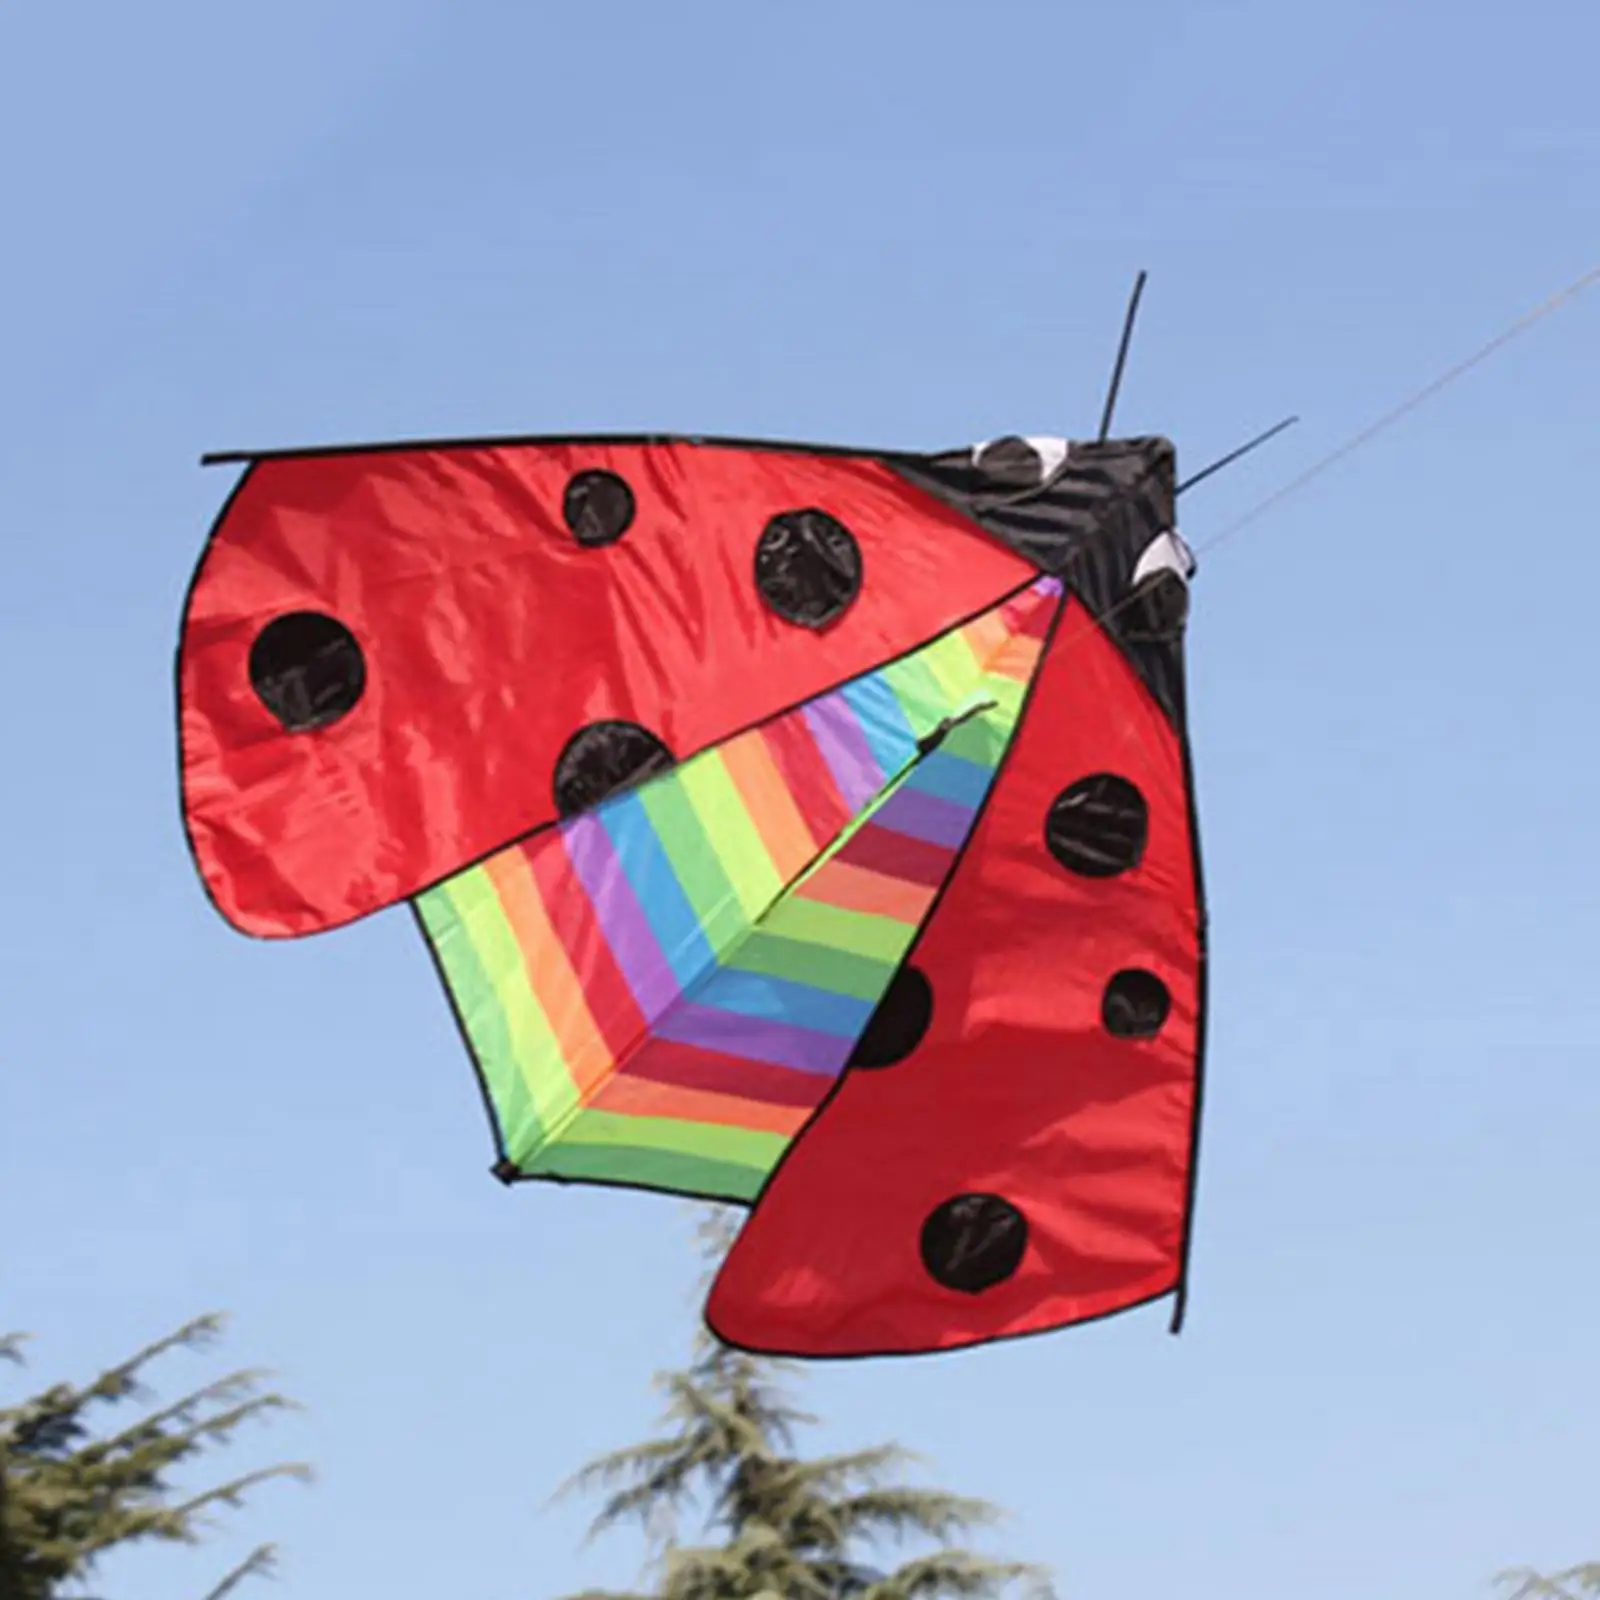 Large Triangle Ladybug Kite Fly Kite Single-Line Flying Toys Novelty Delta Kite for Park Outdoor Family Trips Beach Holiday